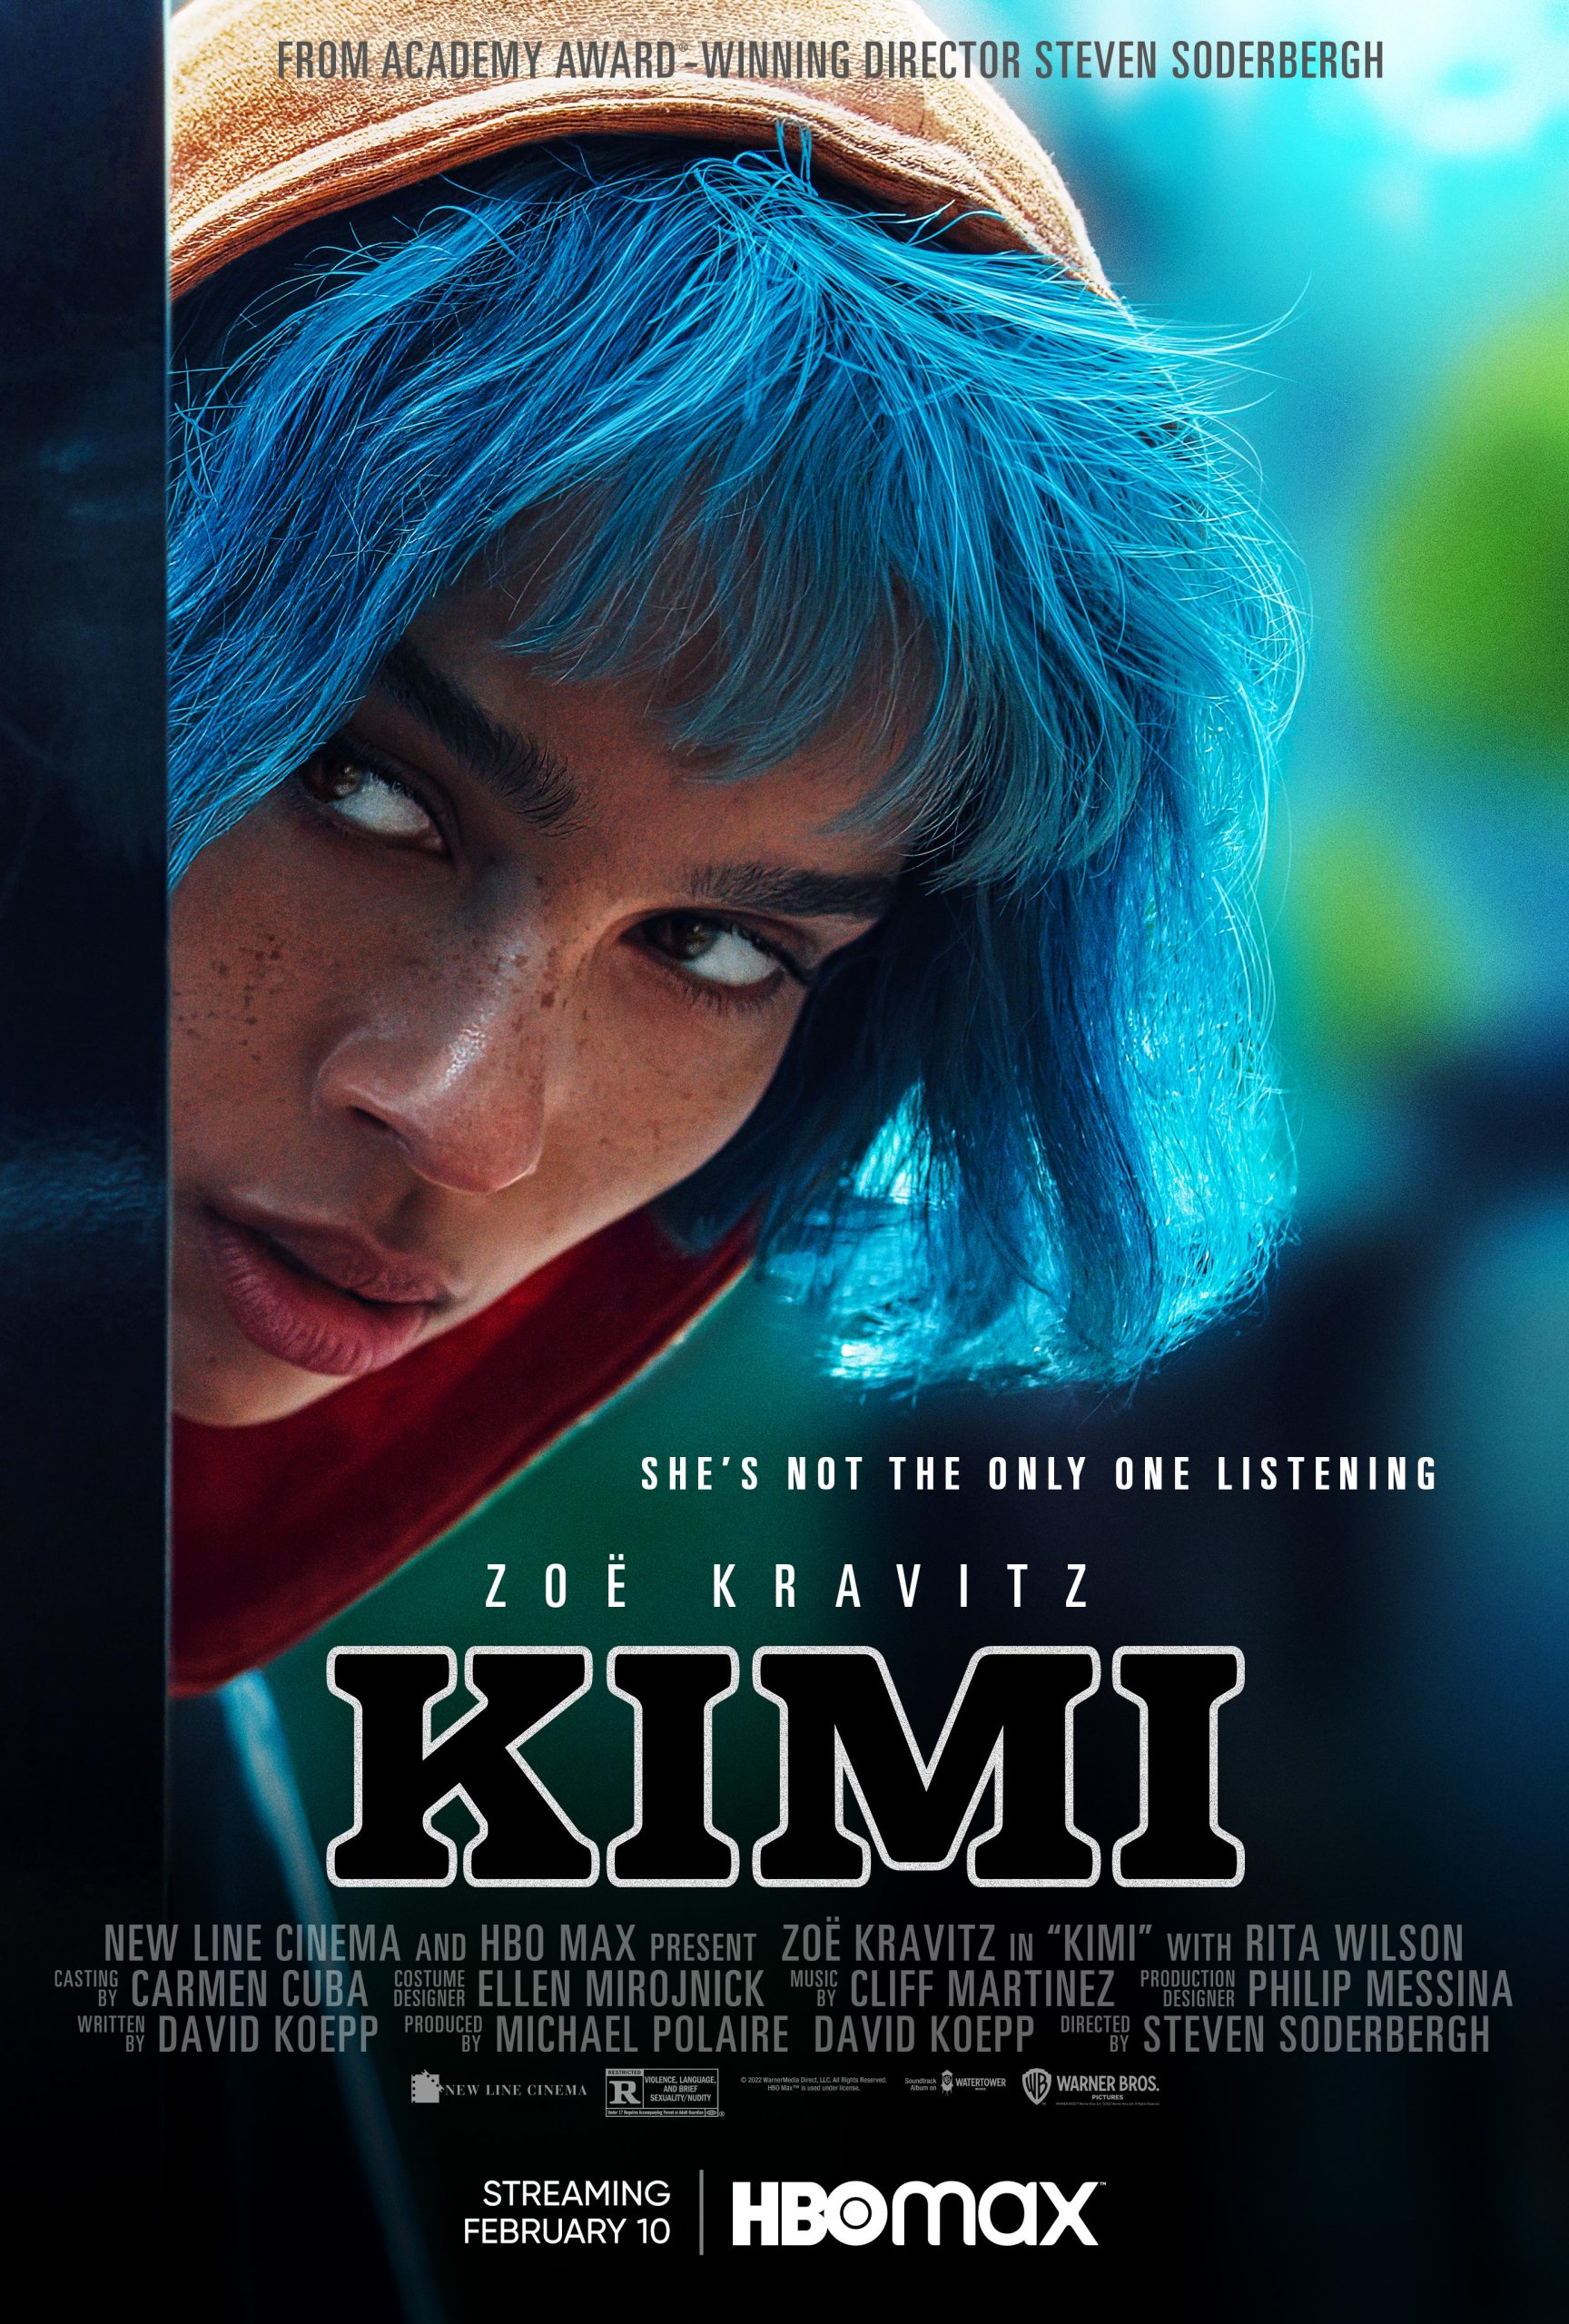 New Movie: ‘KEMI’ Starring Zoë Kravitz